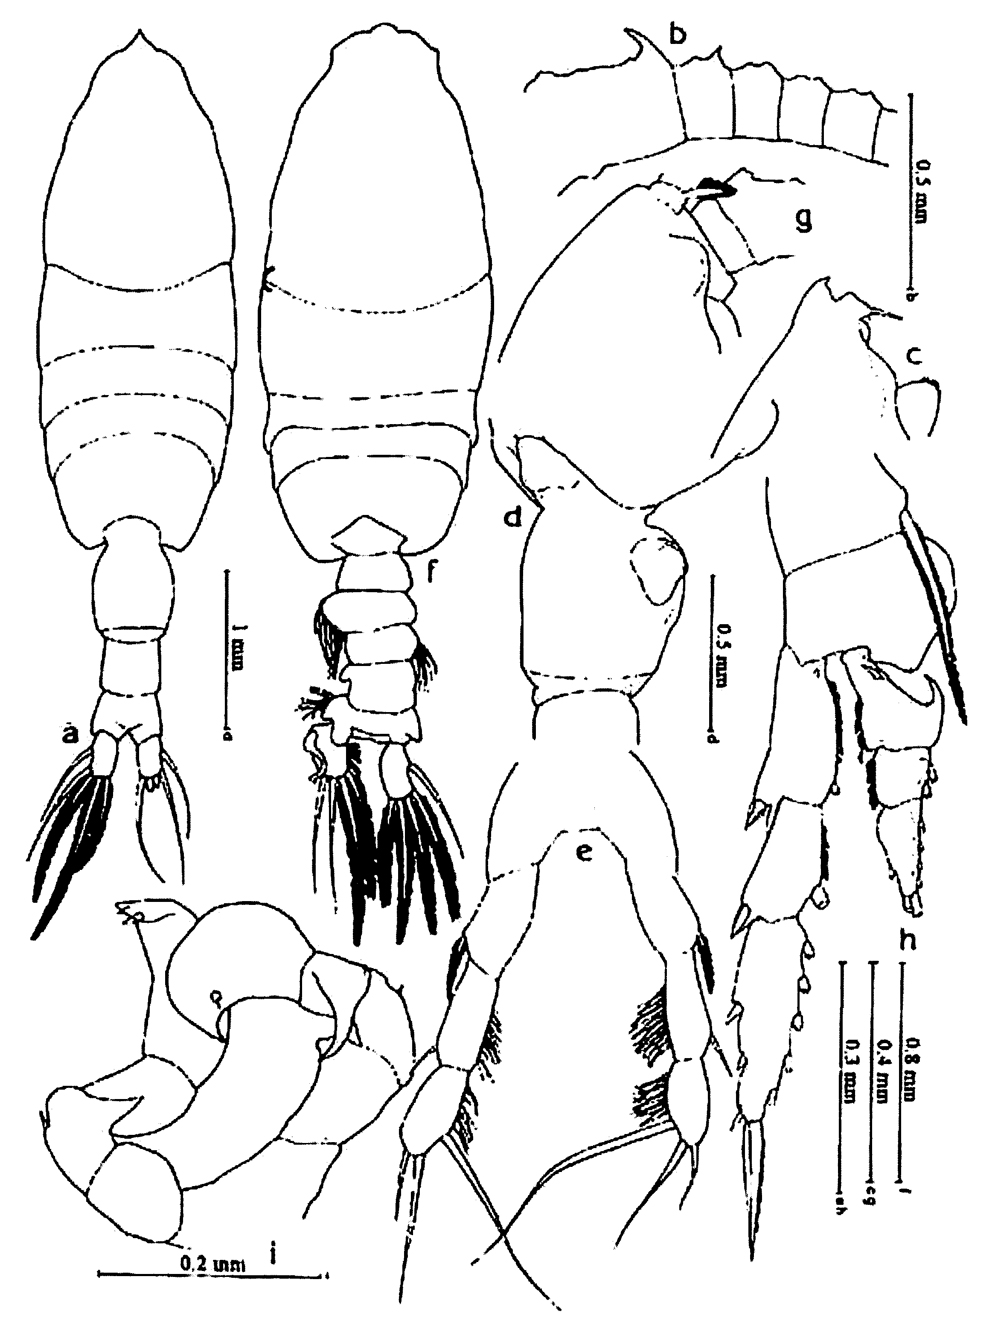 Species Pleuromamma abdominalis - Plate 41 of morphological figures